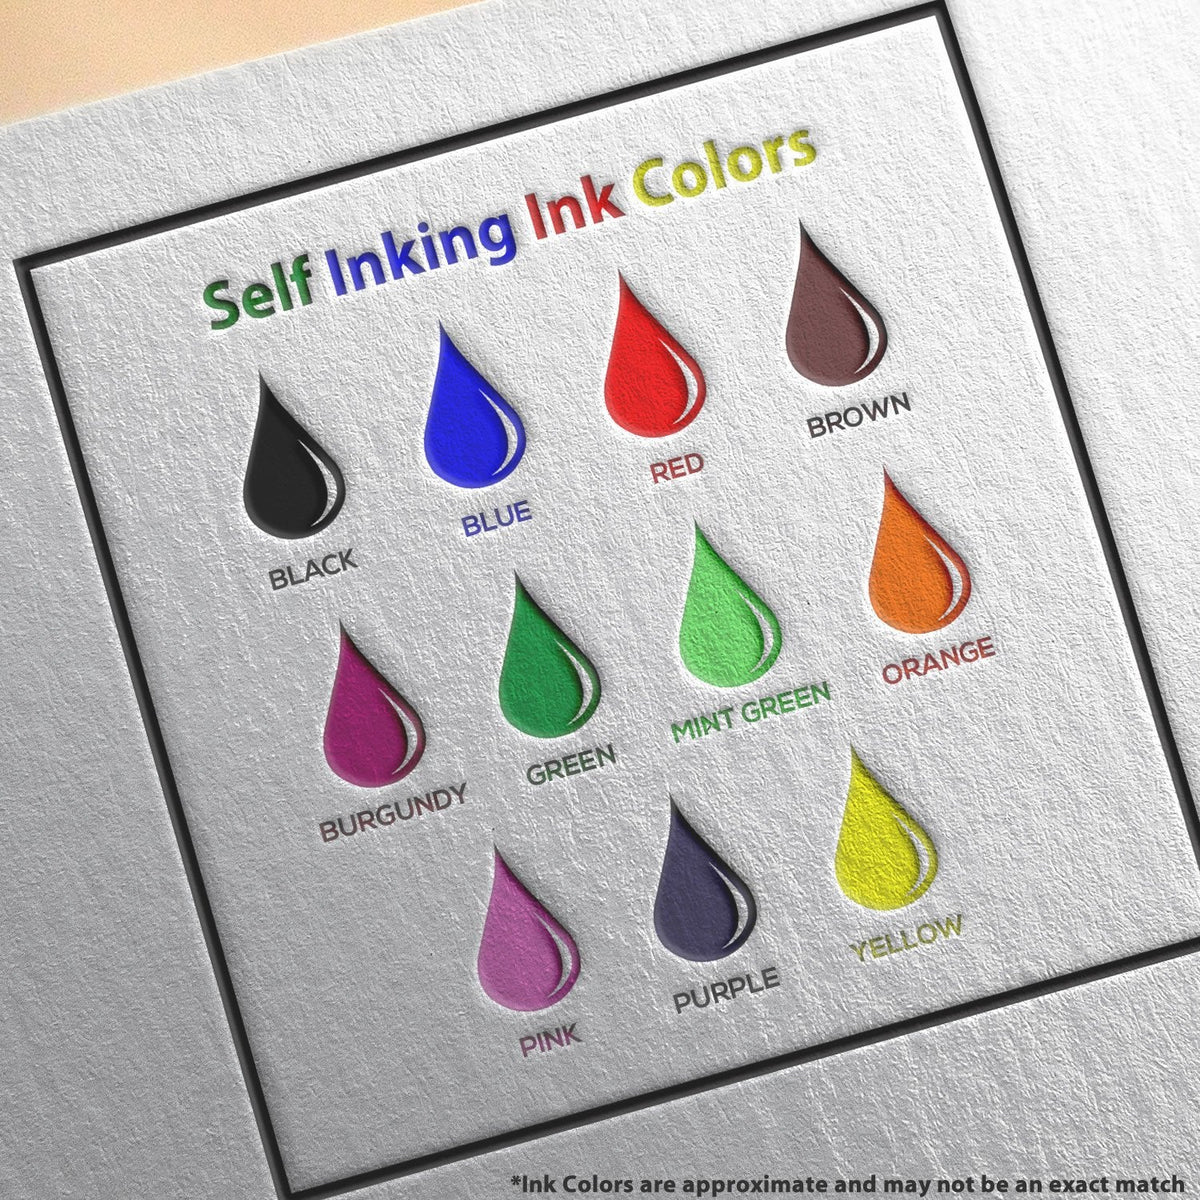 Self-Inking Muestra Stamp Ink Color Options